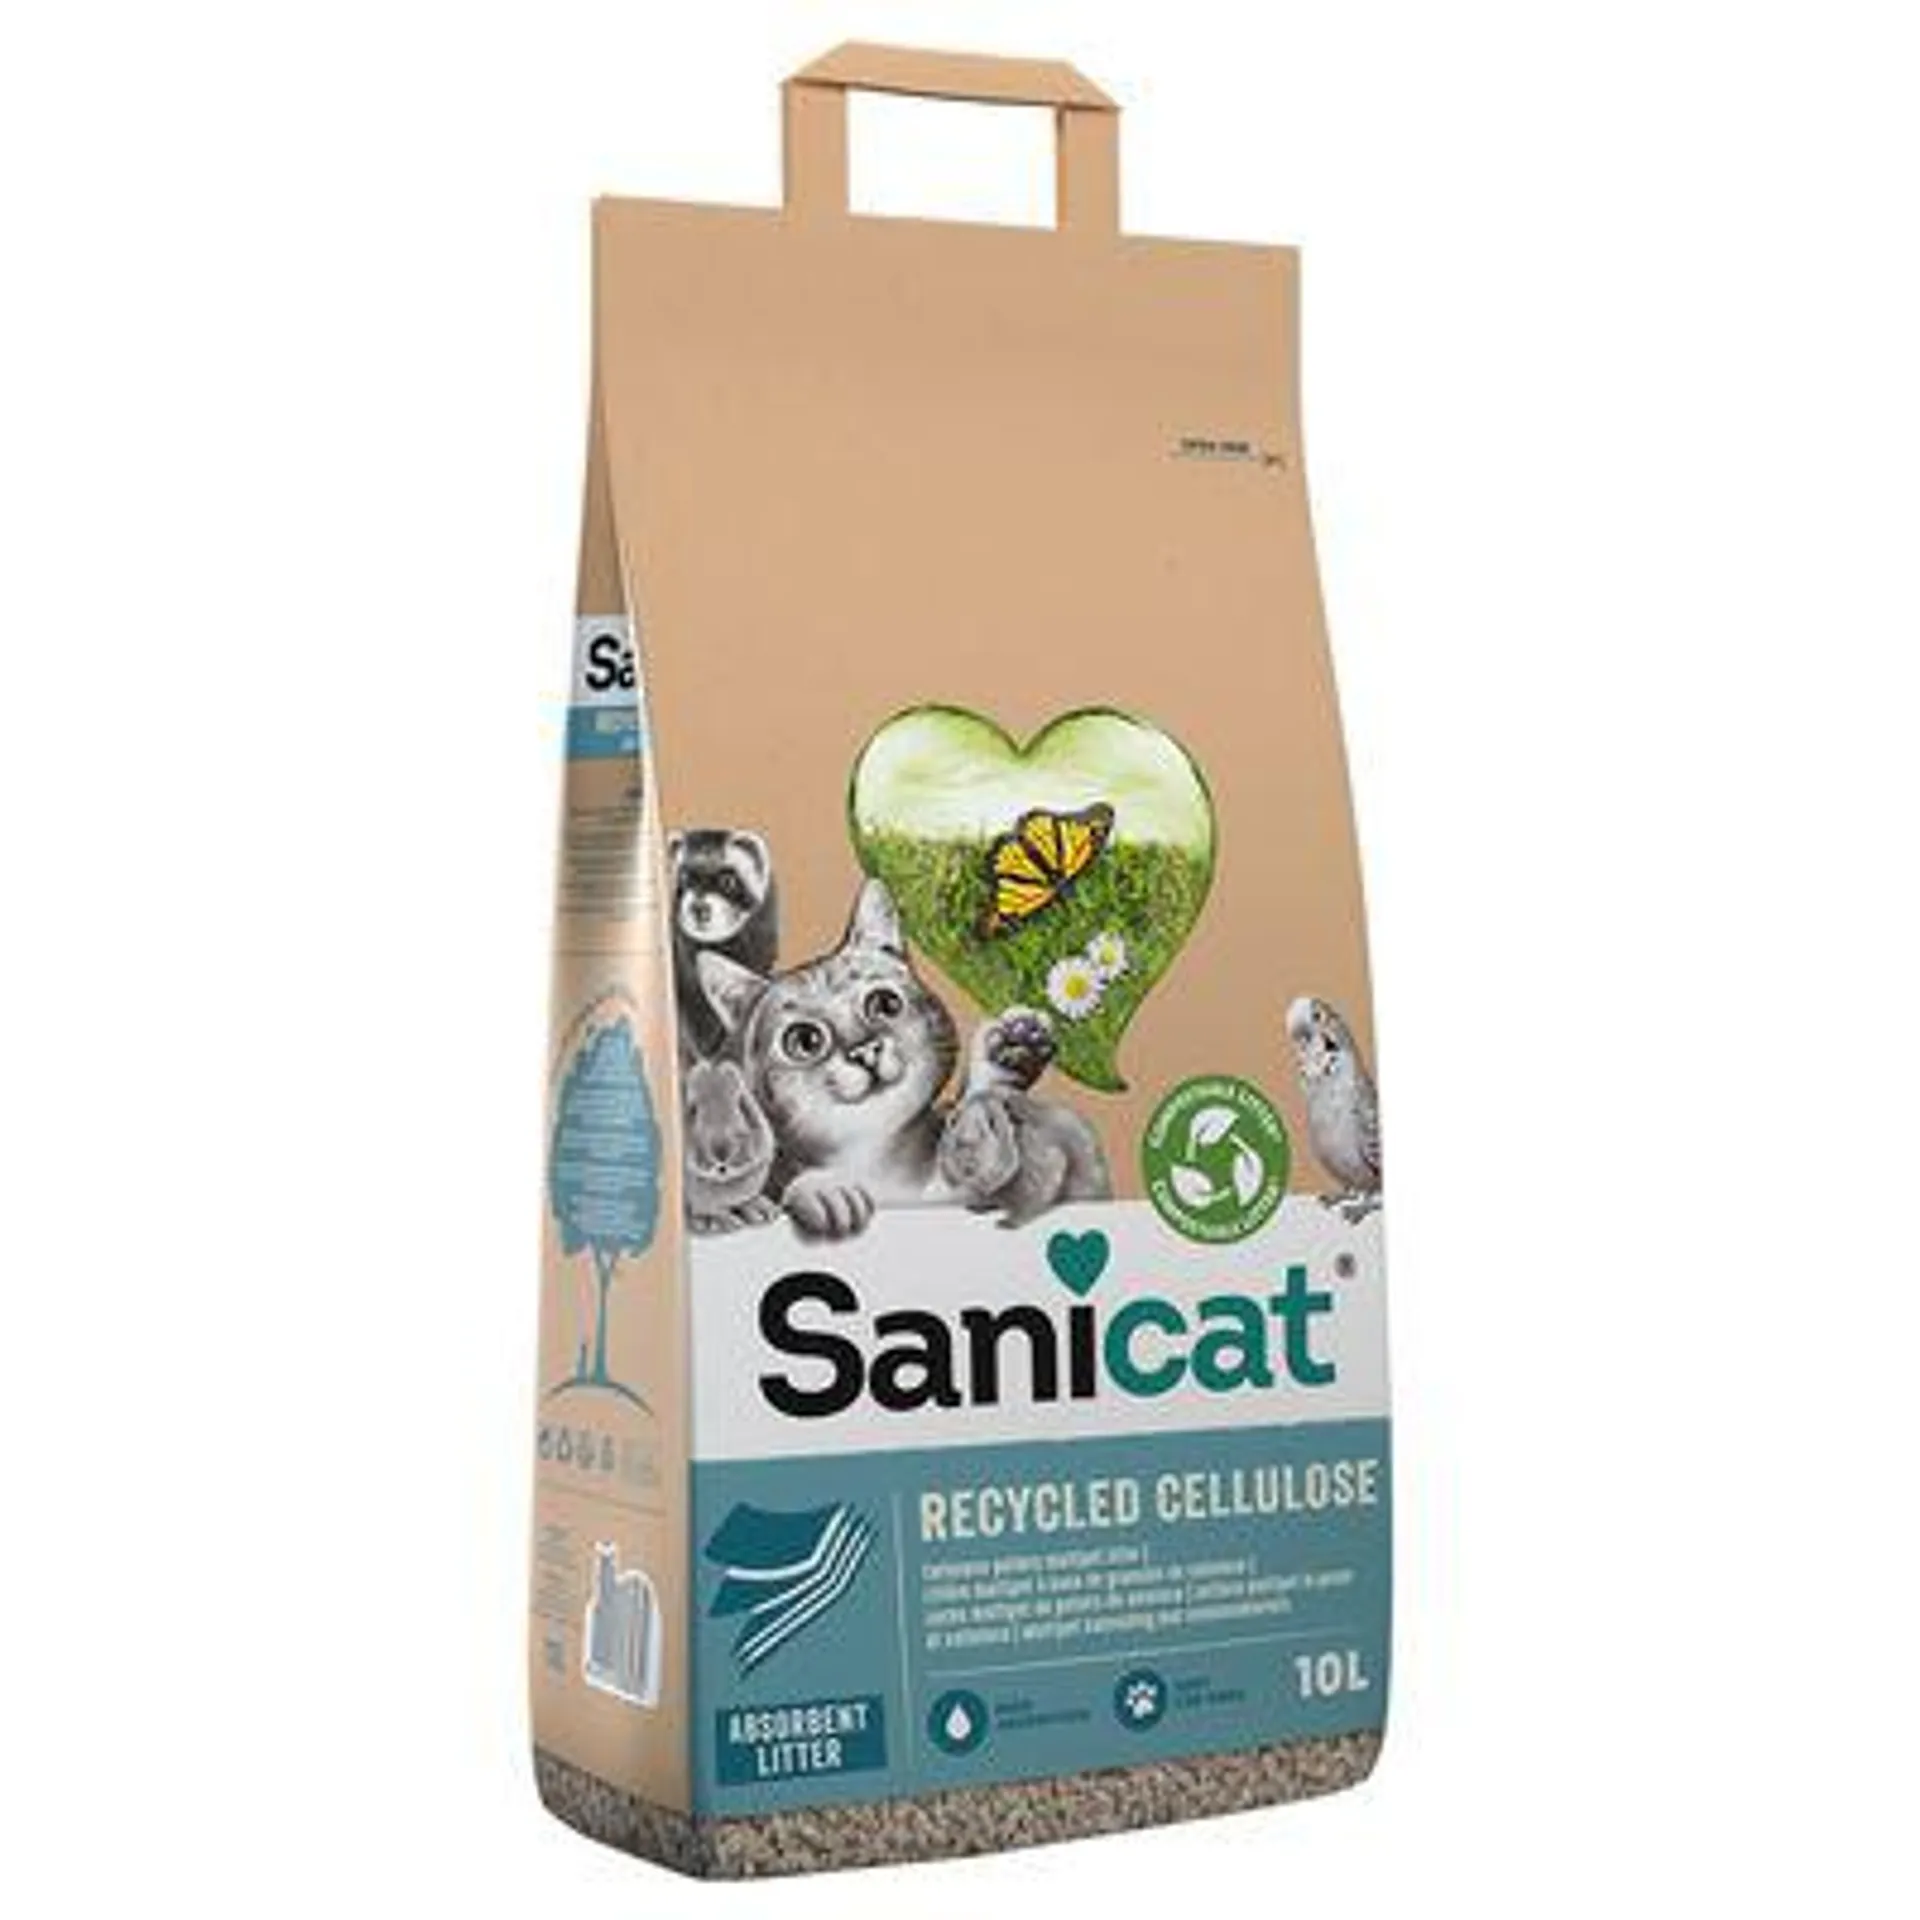 50l Sanicat Recycled Cellulose Cat Litter - 40l + 10l Free! *